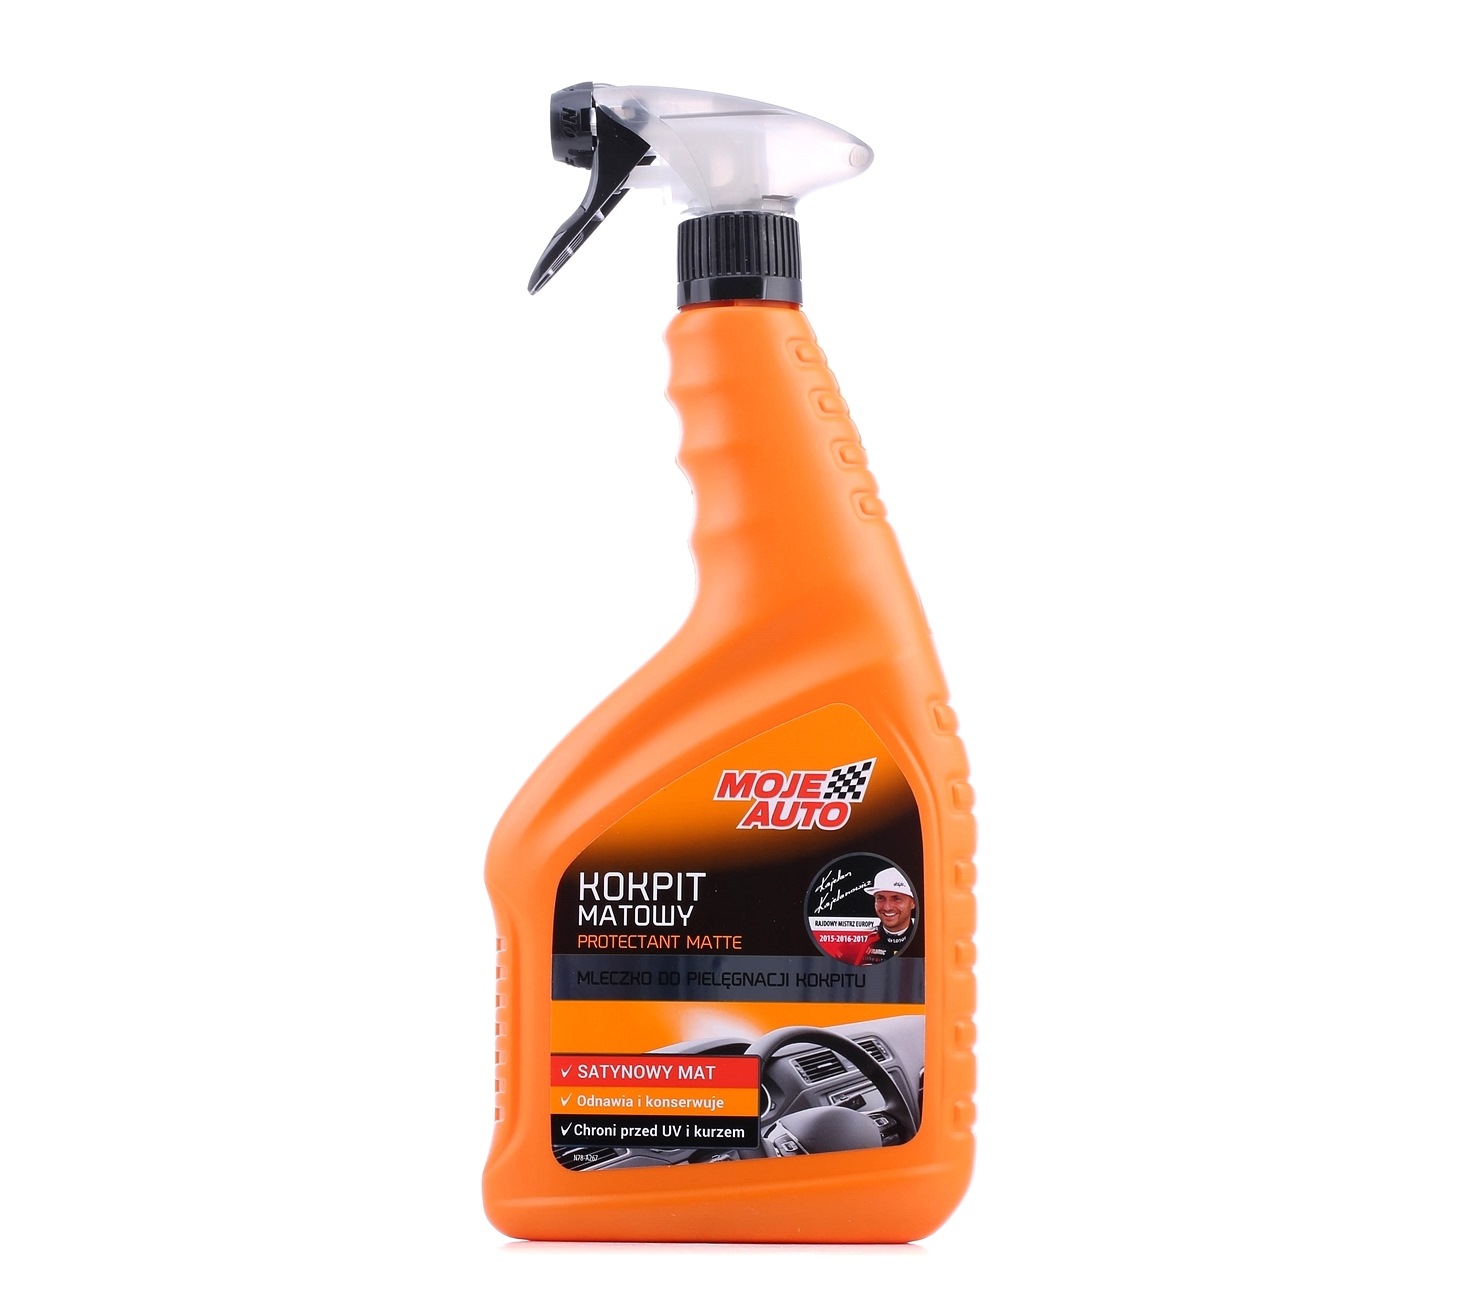 MOJE AUTO 19002 Car exterior cleaning spray Mat, Capacity: 650ml, aerosol